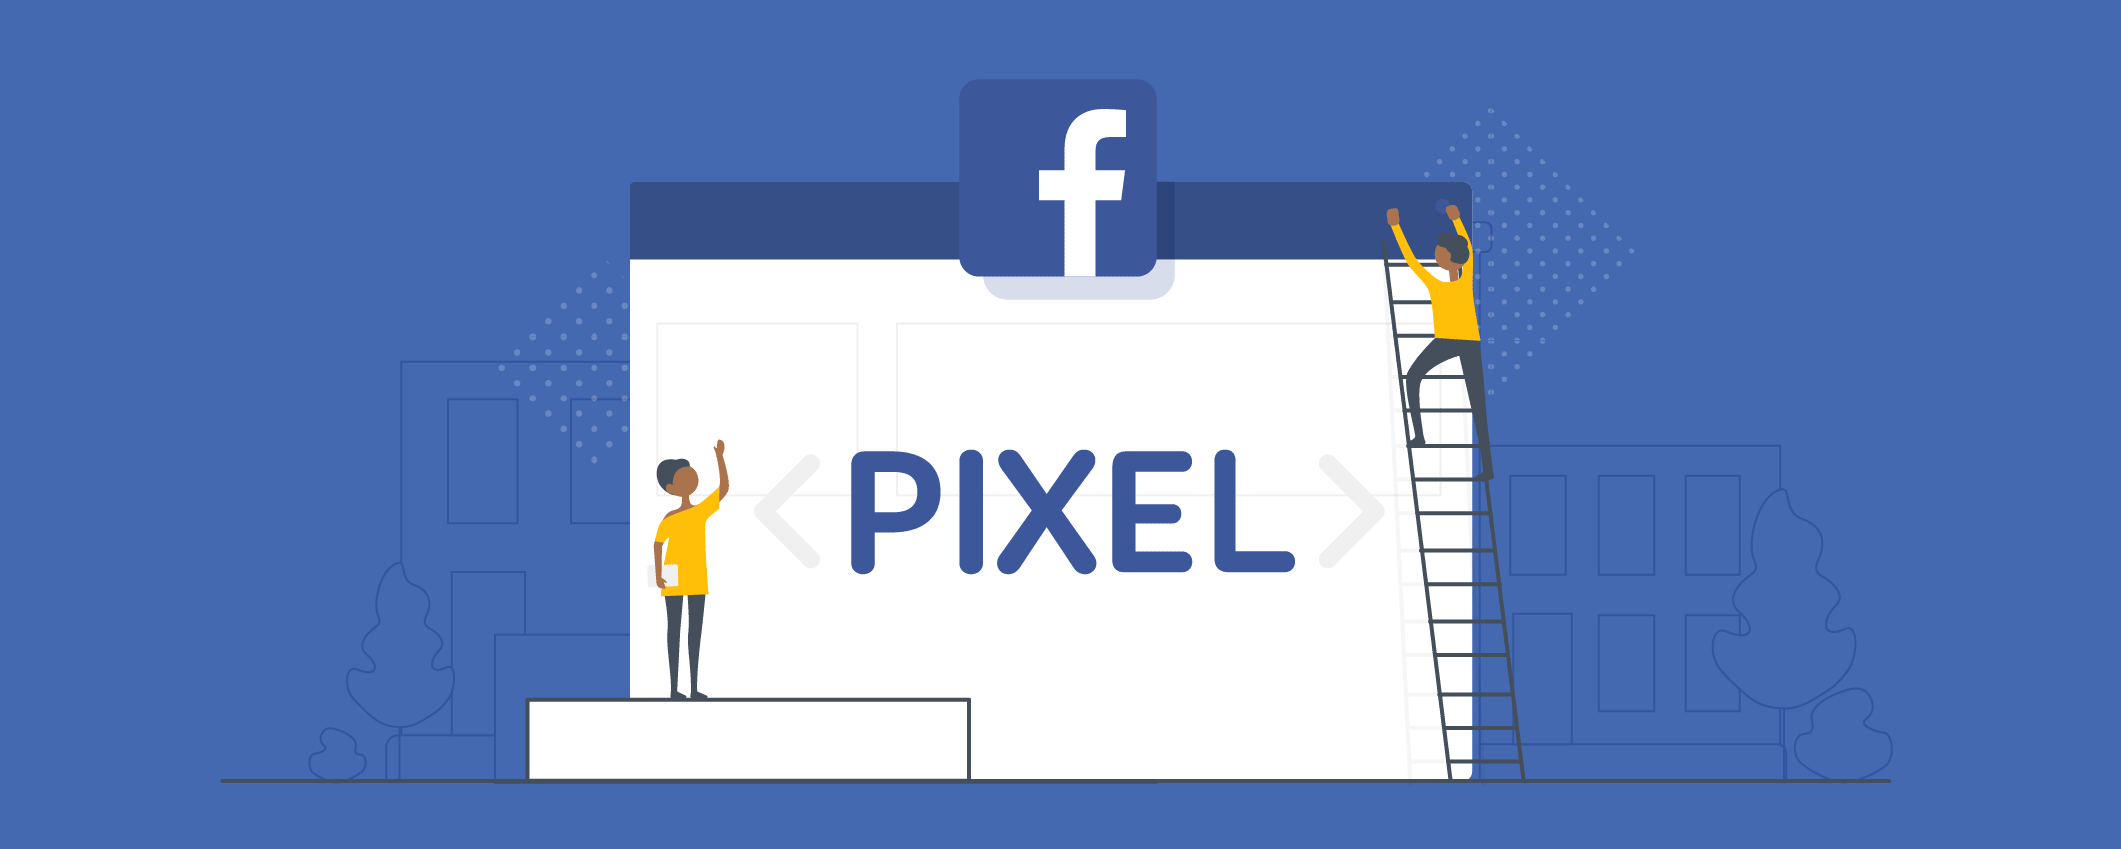 Facebook-Pixel là gì